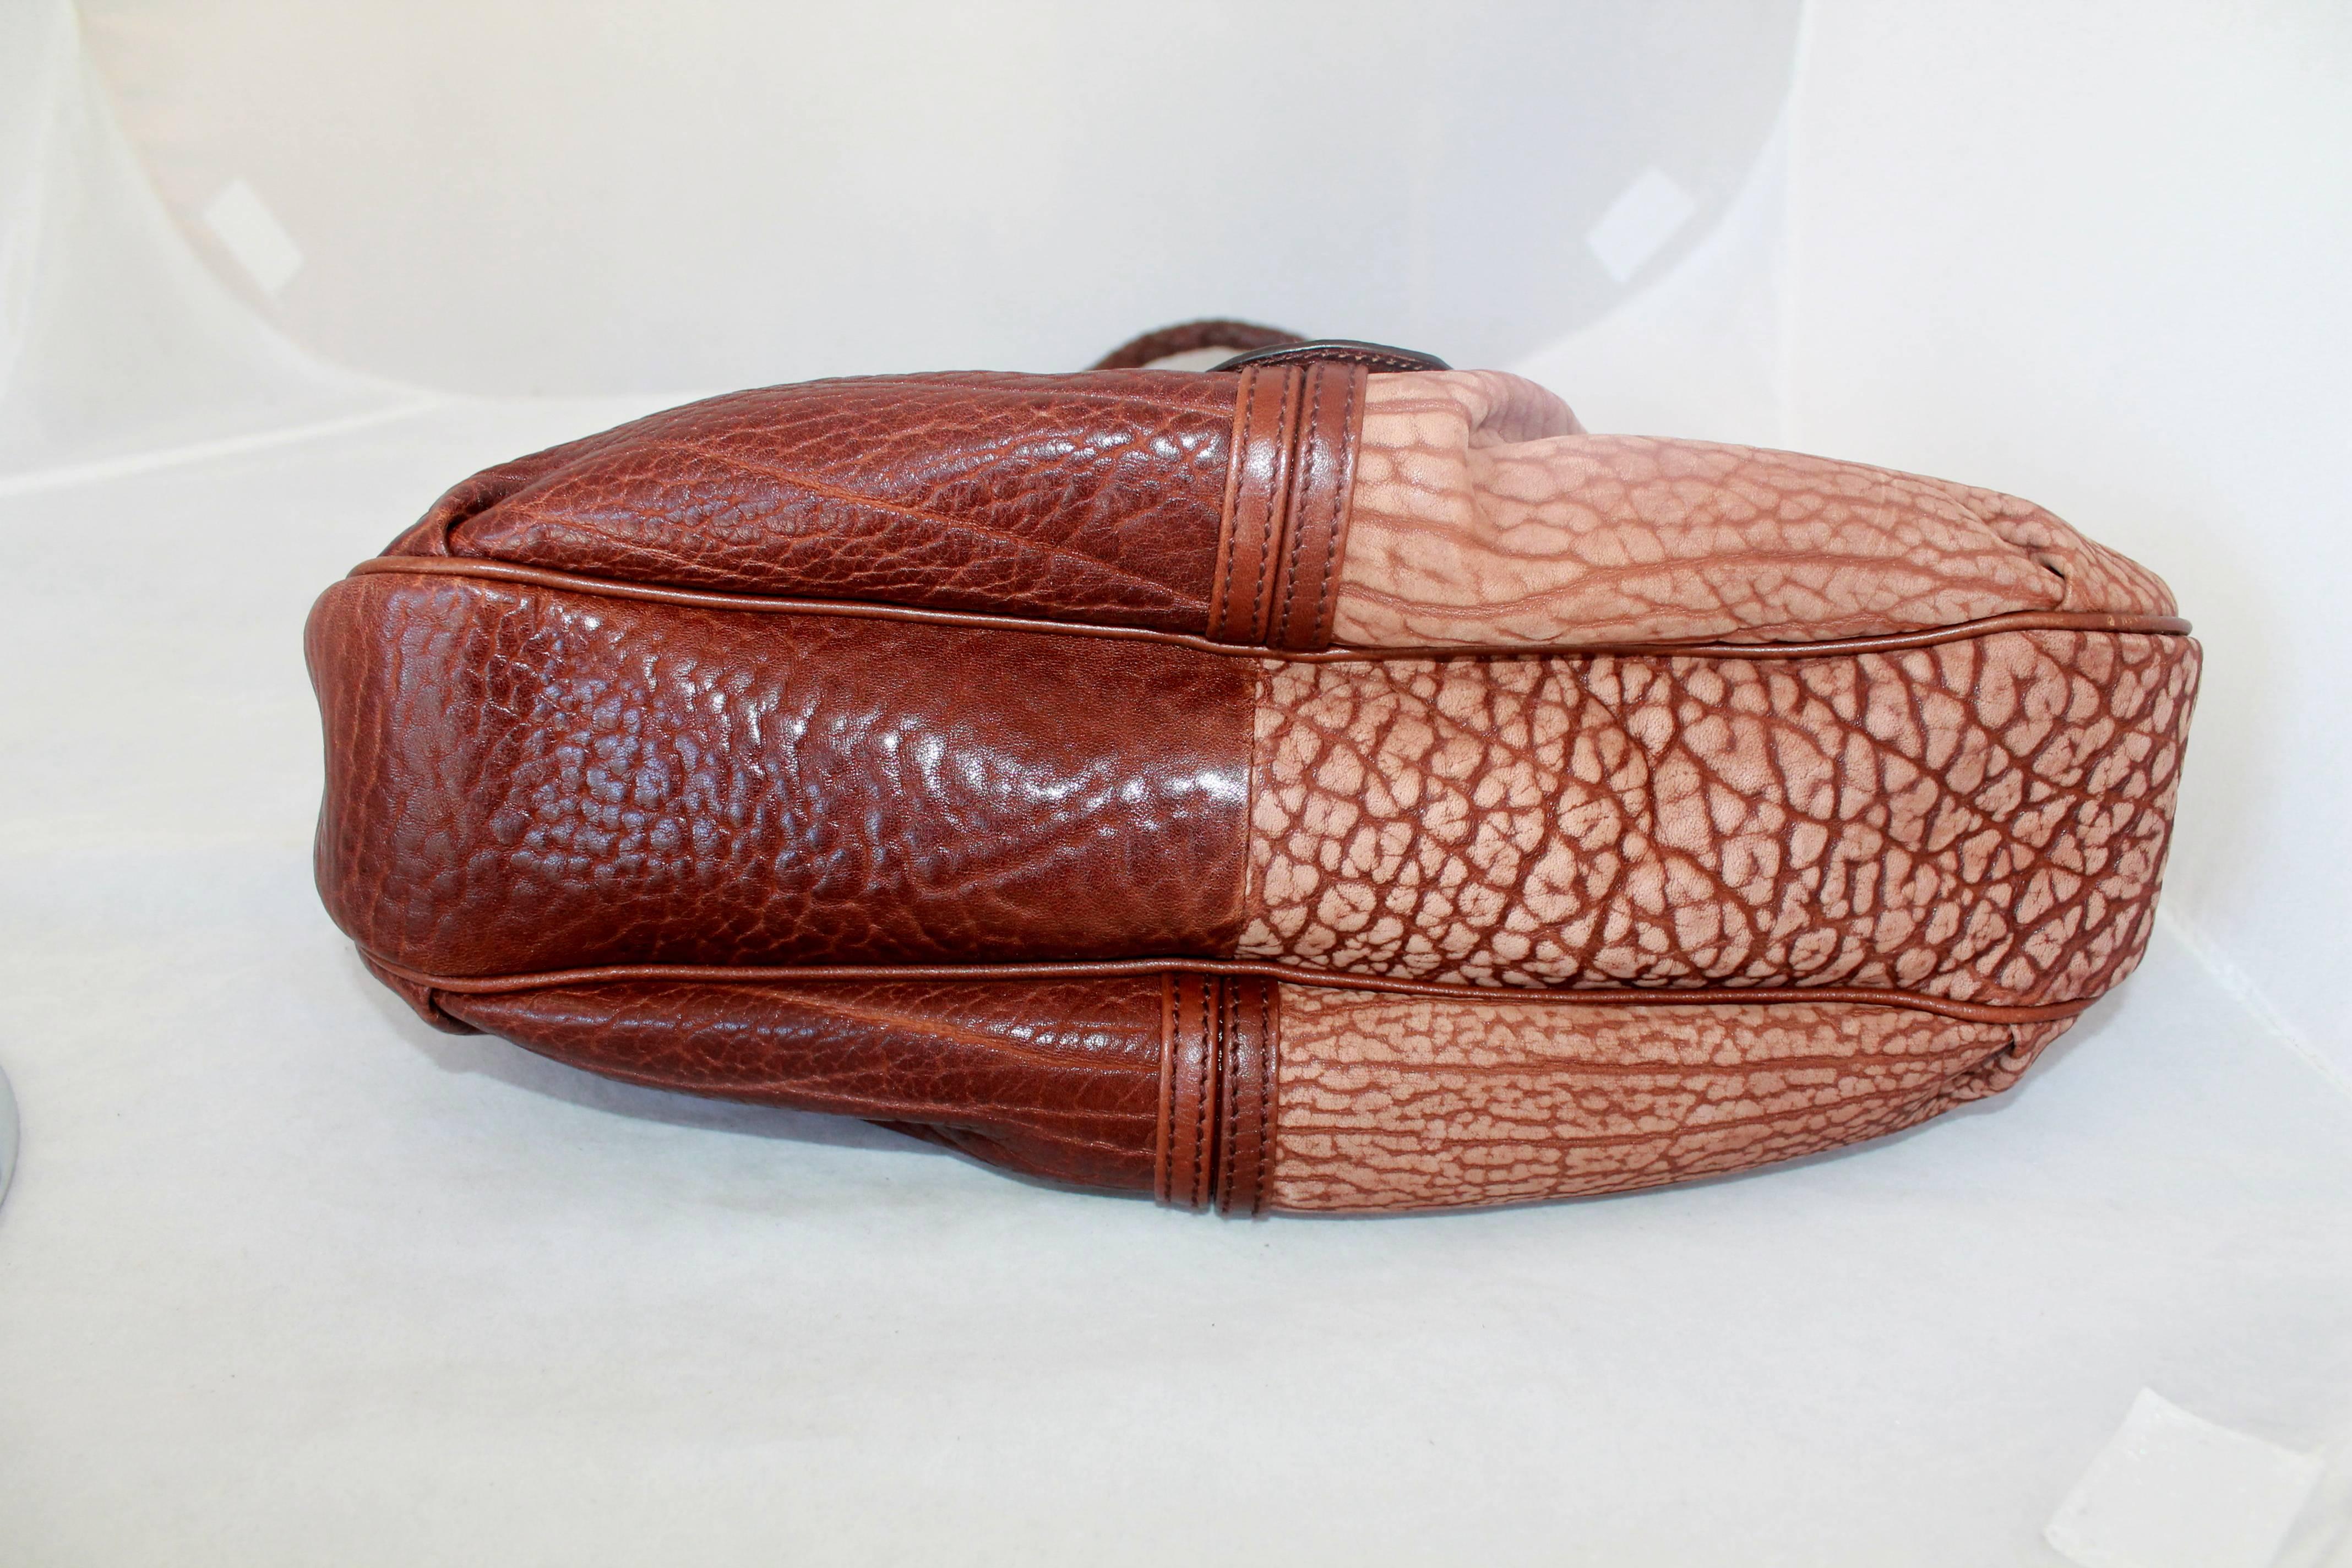 Salvatore Ferragamo Two-Toned Brown Leather Should Bag - SHW 1